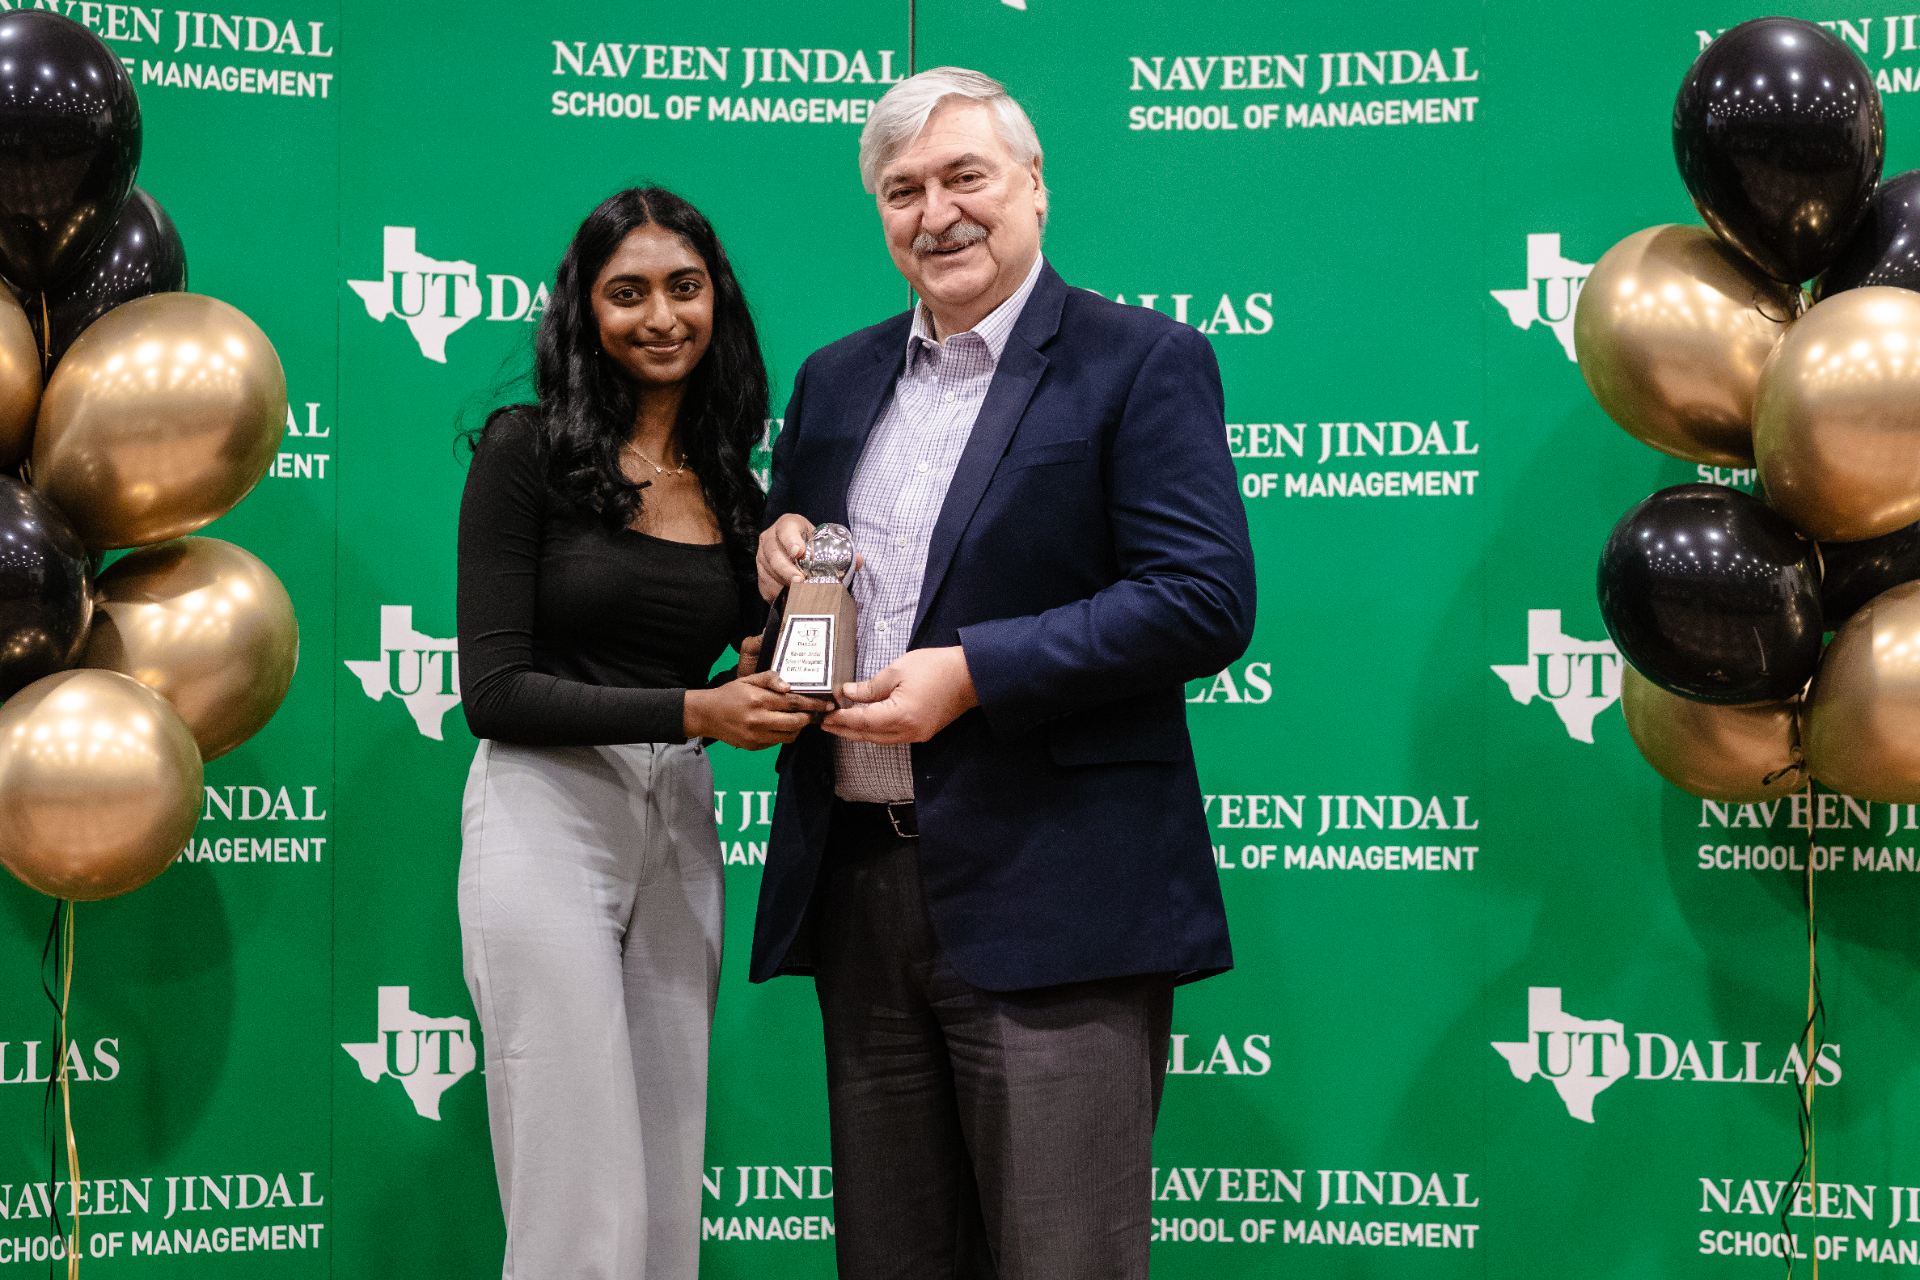 JSOM Dean Pirkul presents Undergraduate Student of the Year OWLIE award to Sapna Krishnan.